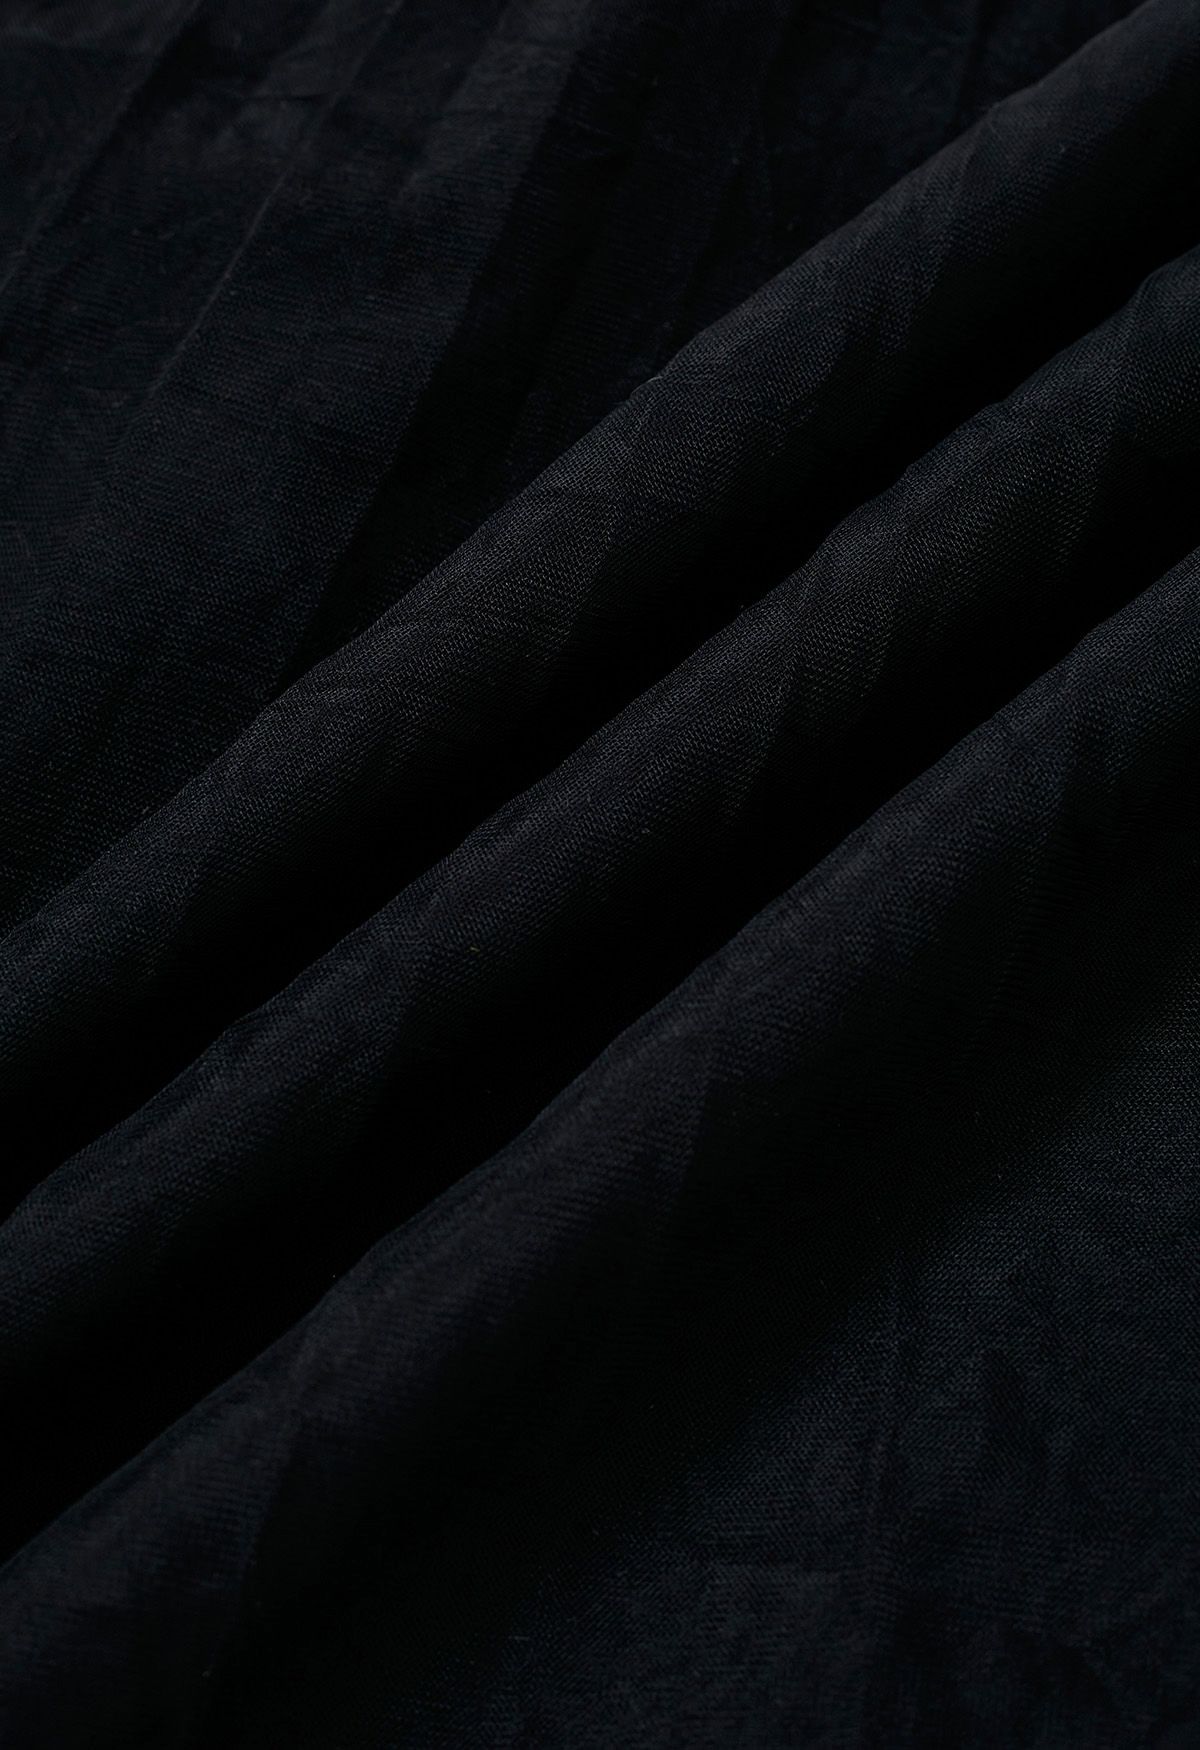 Falda midi de tul de malla con dobladillo ribeteado en negro